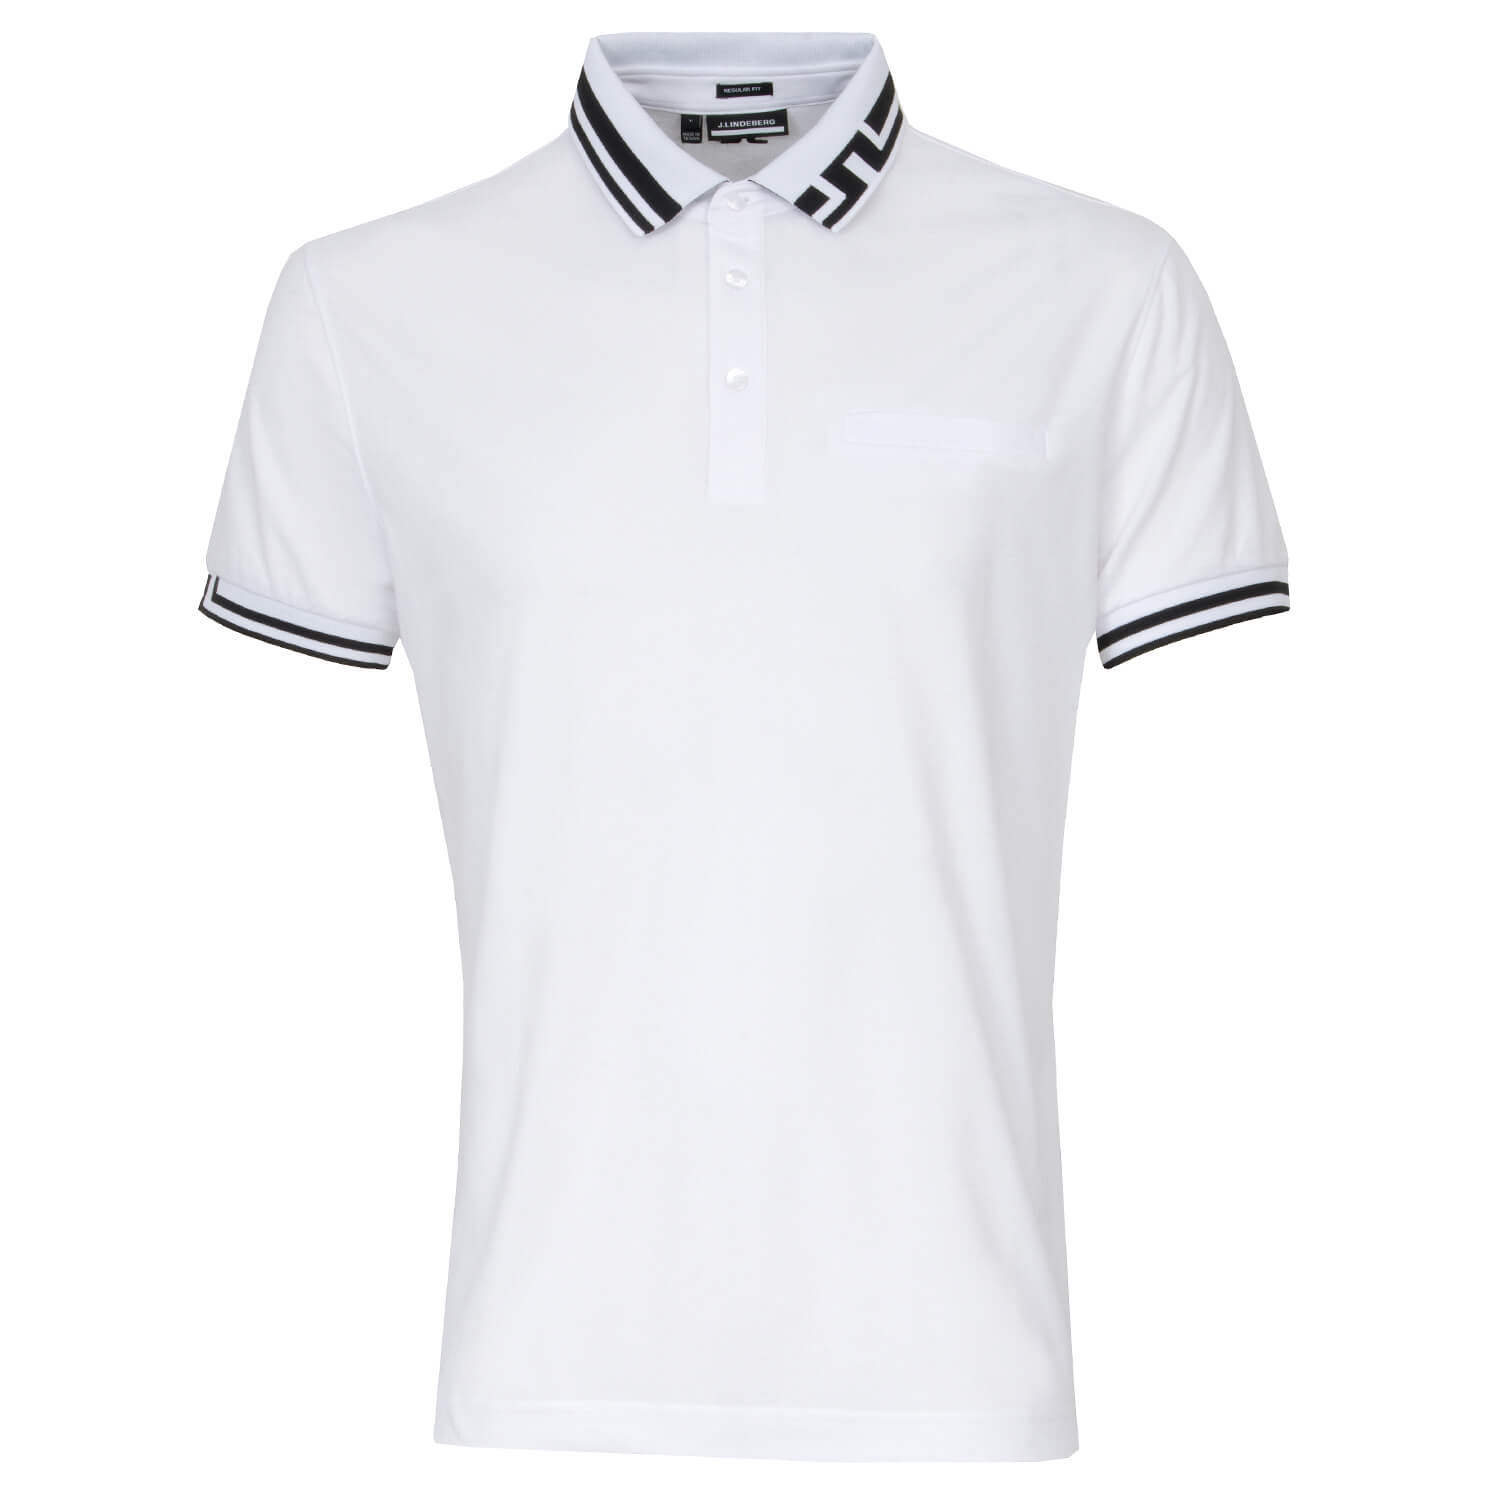 J Lindeberg Bruce Polo Shirt White AW20 | Scottsdale Golf